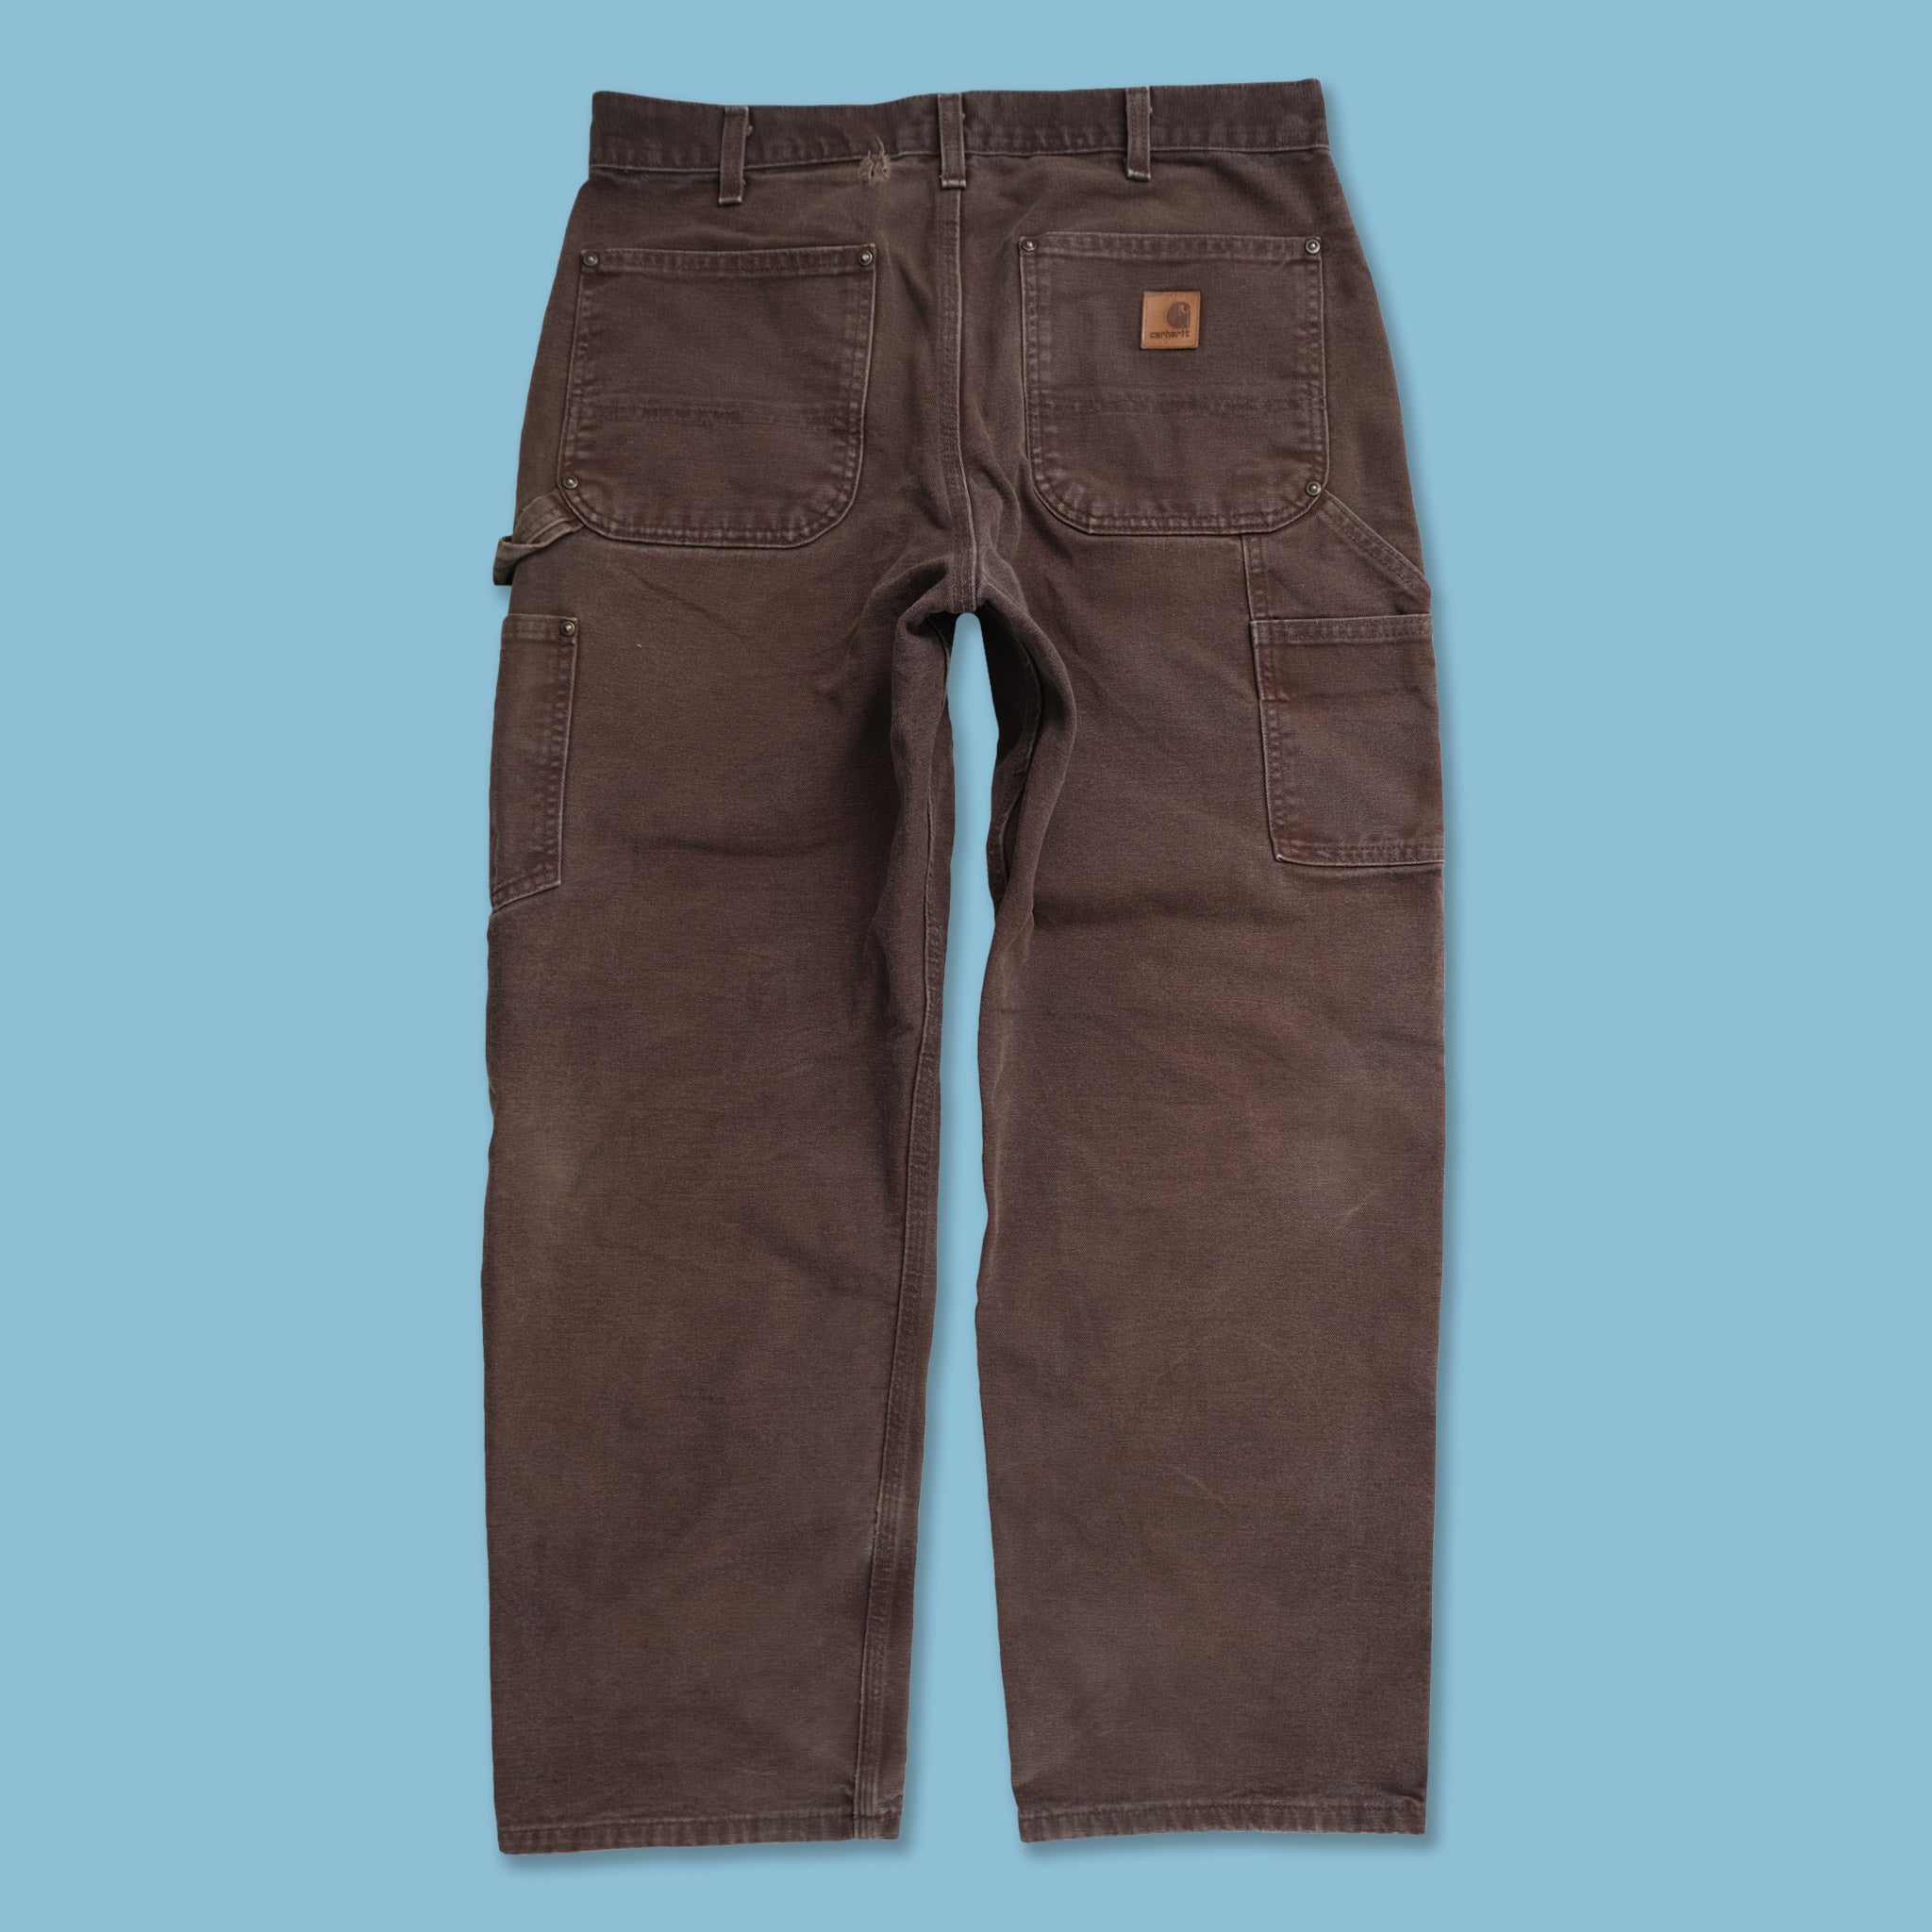 Carhartt Duck Work Pants Double Knee Size 40x30 Distressing brown rust  Vintage